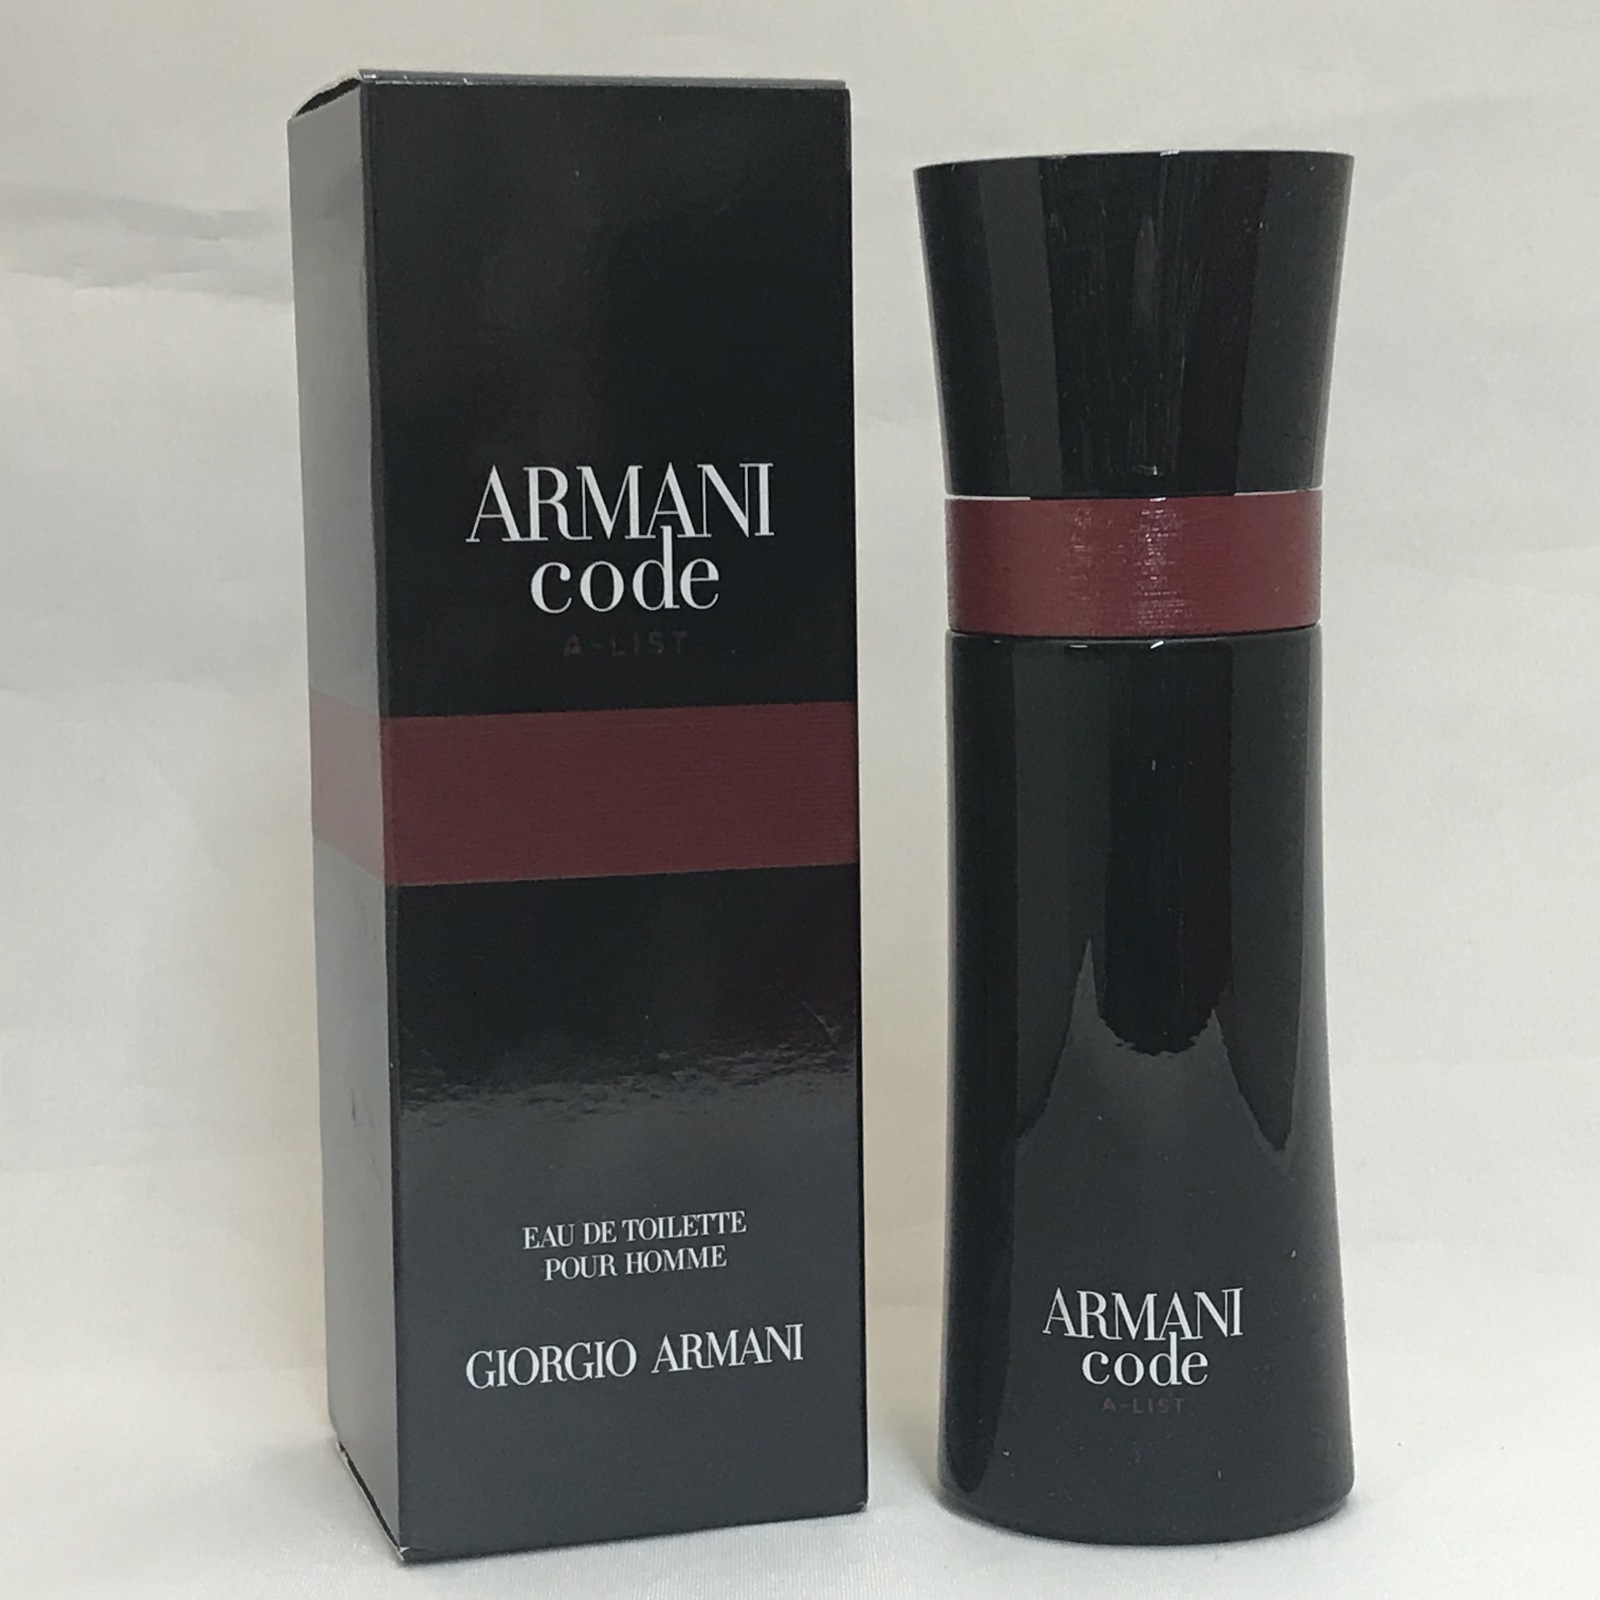 Armani Code A-List by Giorgio Armani for Men 2.5 oz / 75 ml EDT Spray - $75.98